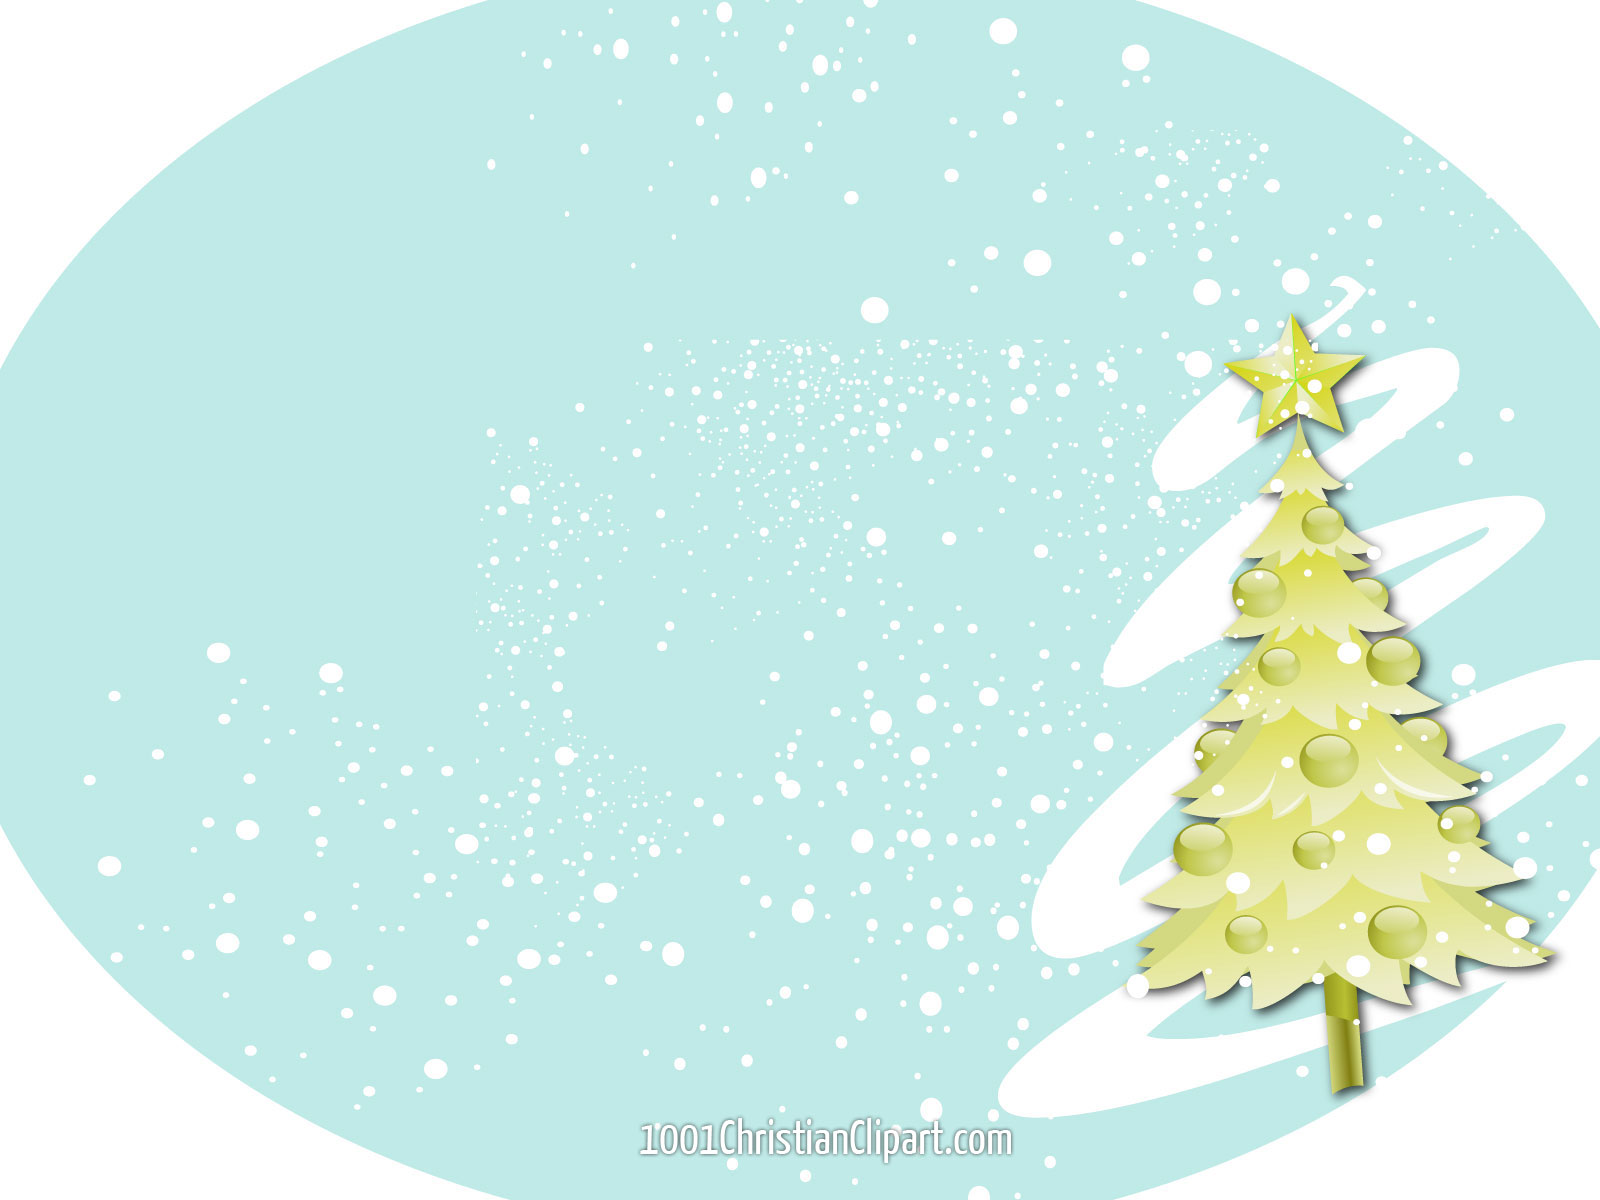 Christmas Tree And Snow | Christian Wallpaper, Christian Clip Art ...